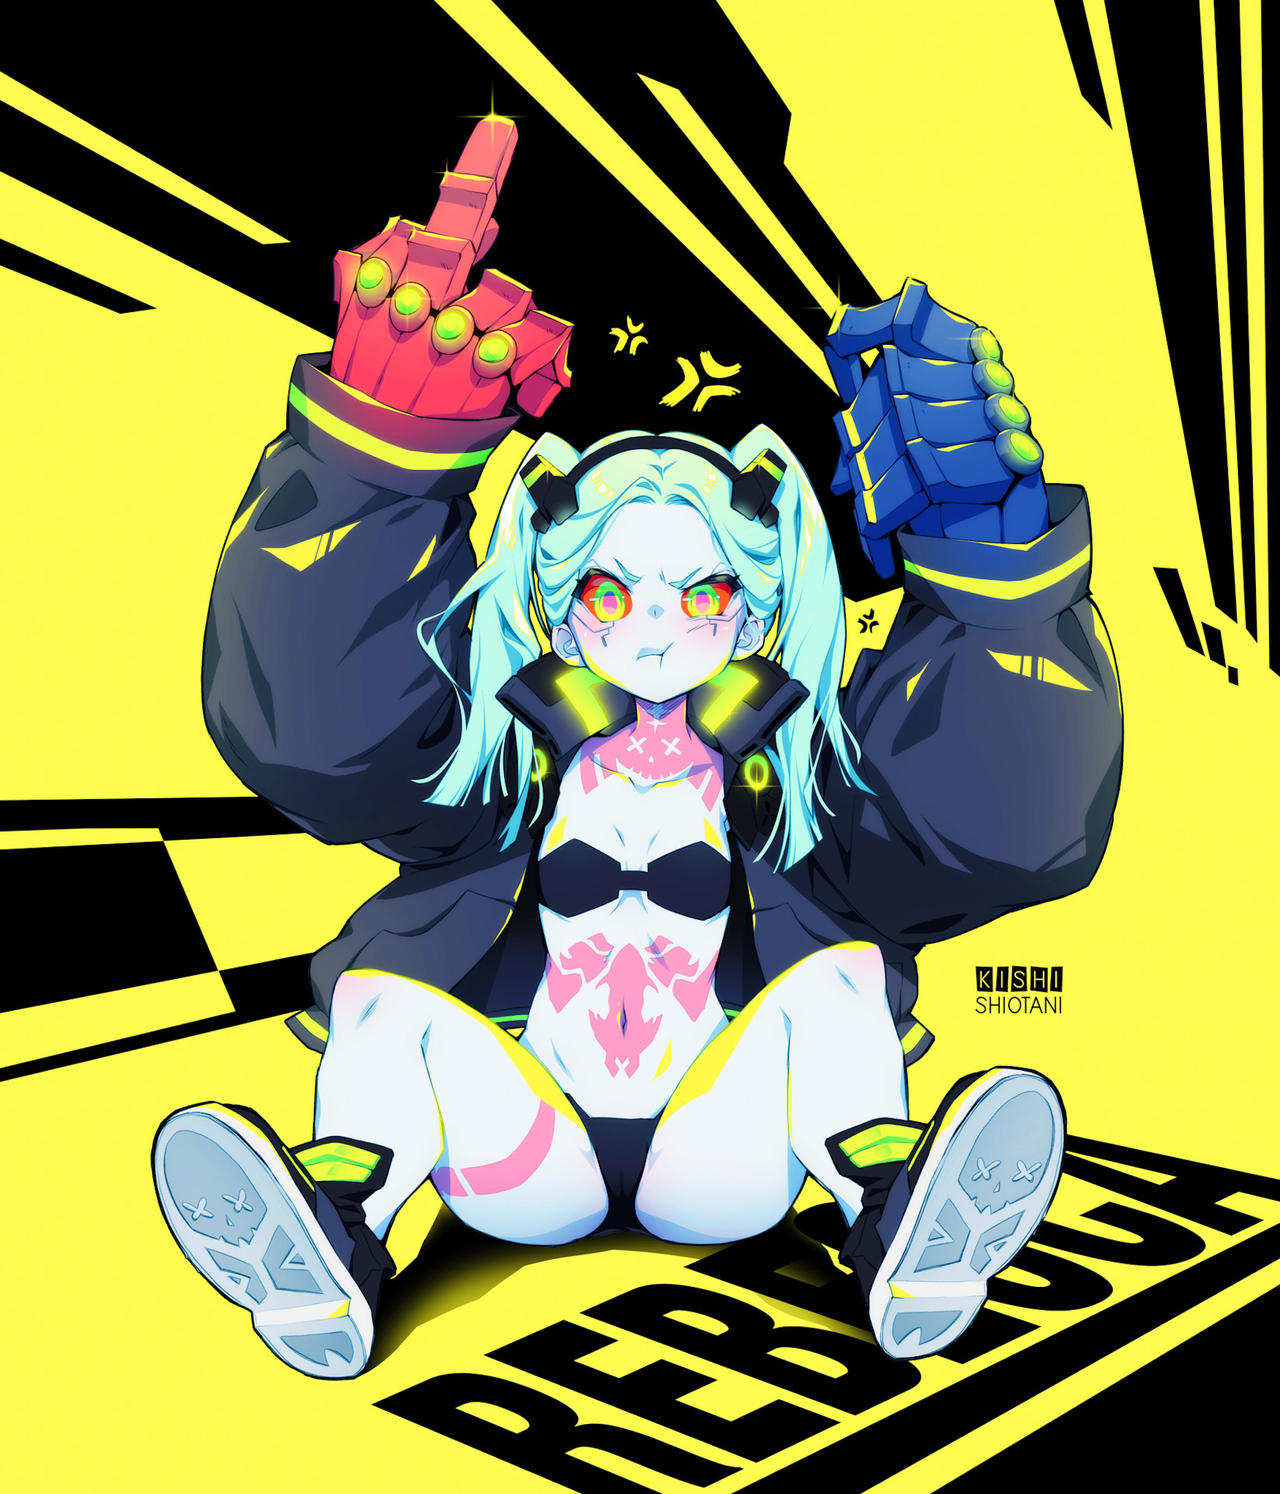 Rebecca - Cyberpunk Edgerunners by KishiShiotani on DeviantArt